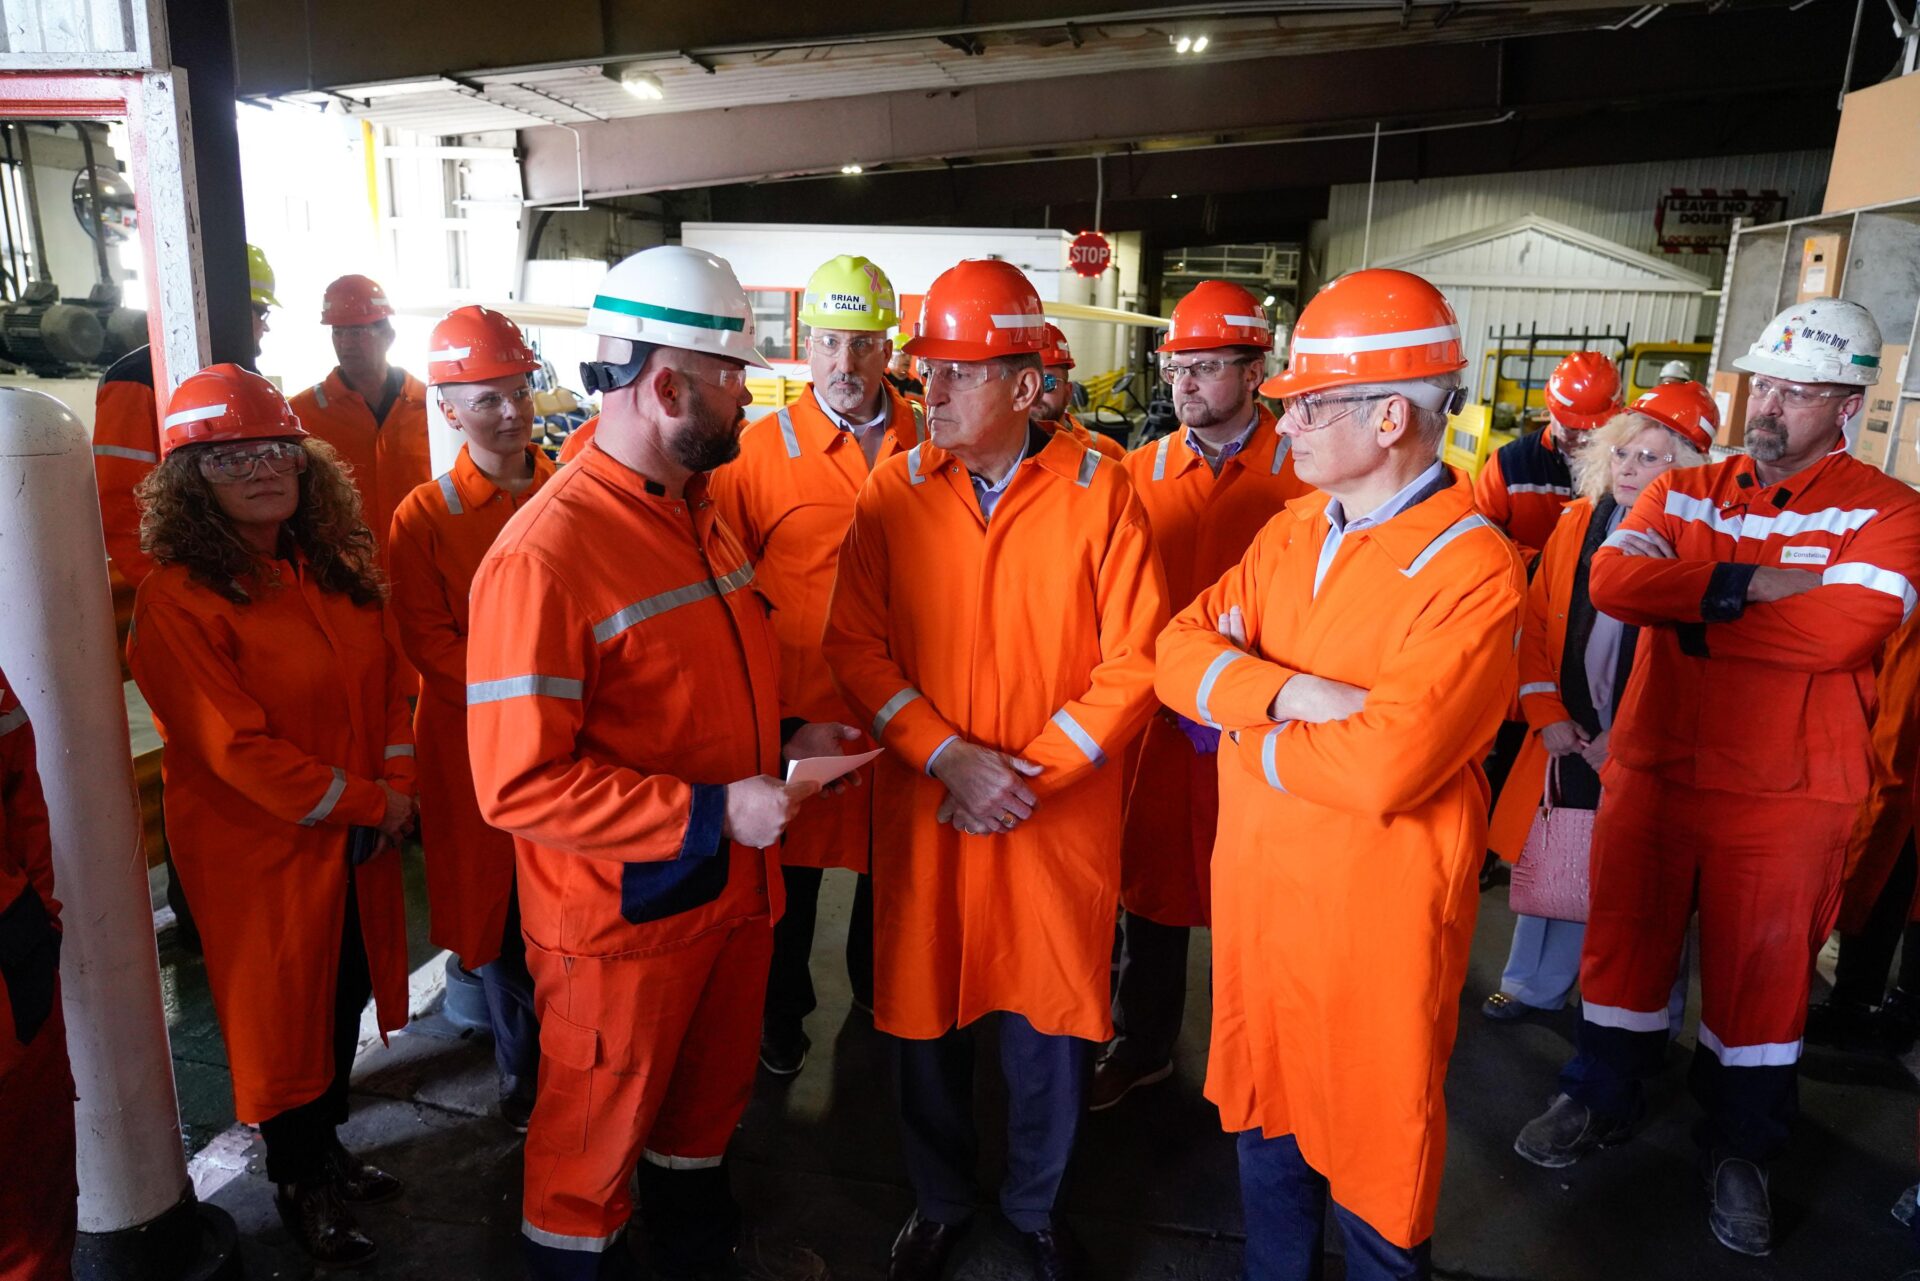 People wearing orange coats and orange hard hats gather inside an industrial building.